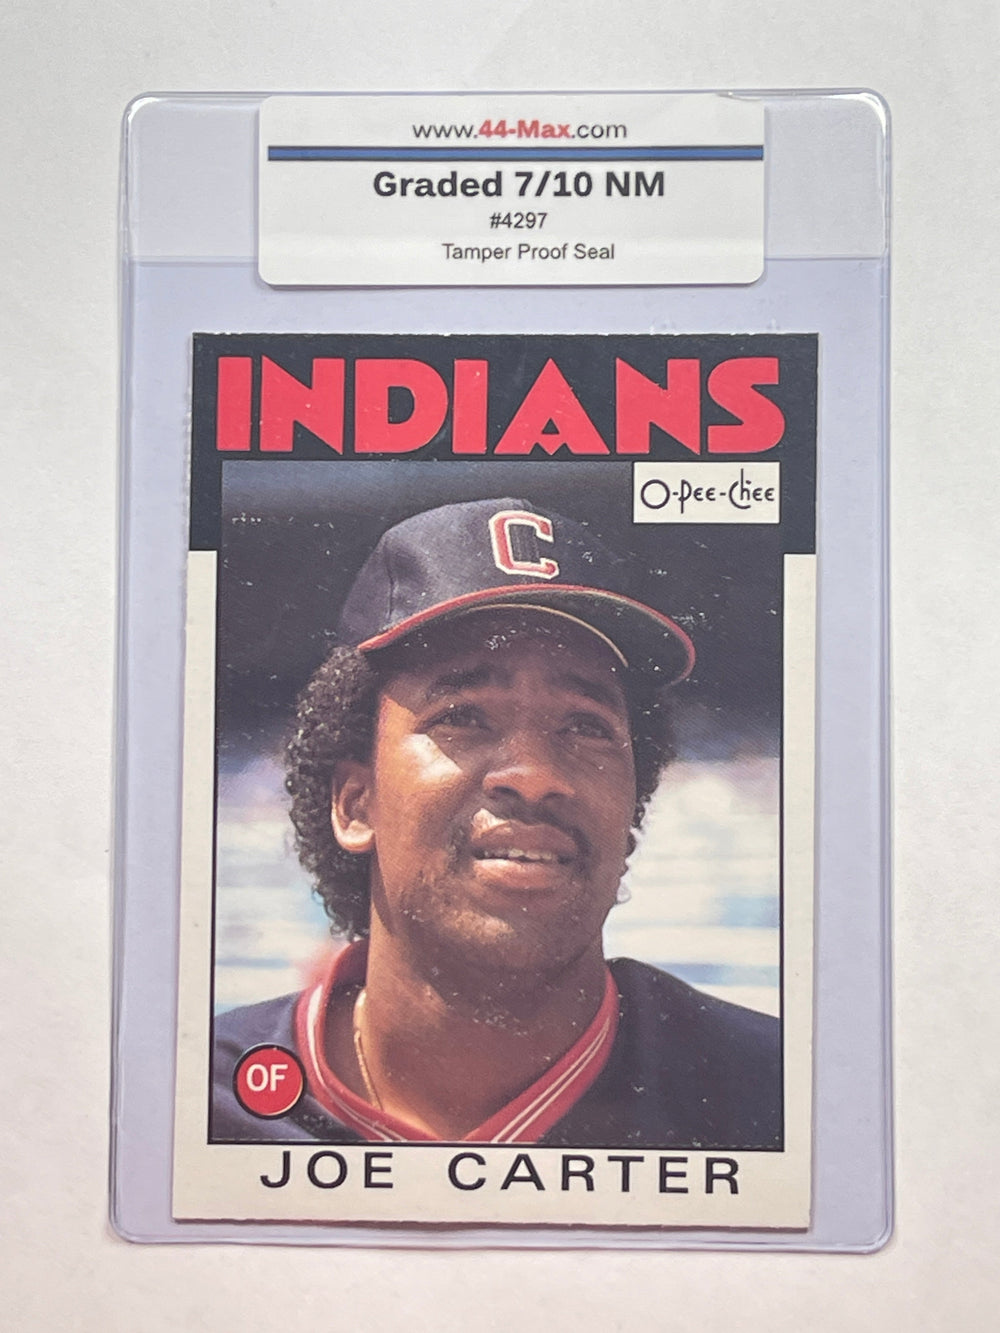 Joe Carter 1986 O-Pee-Chee Baseball Card. 44-Max 7/10 NM #4297